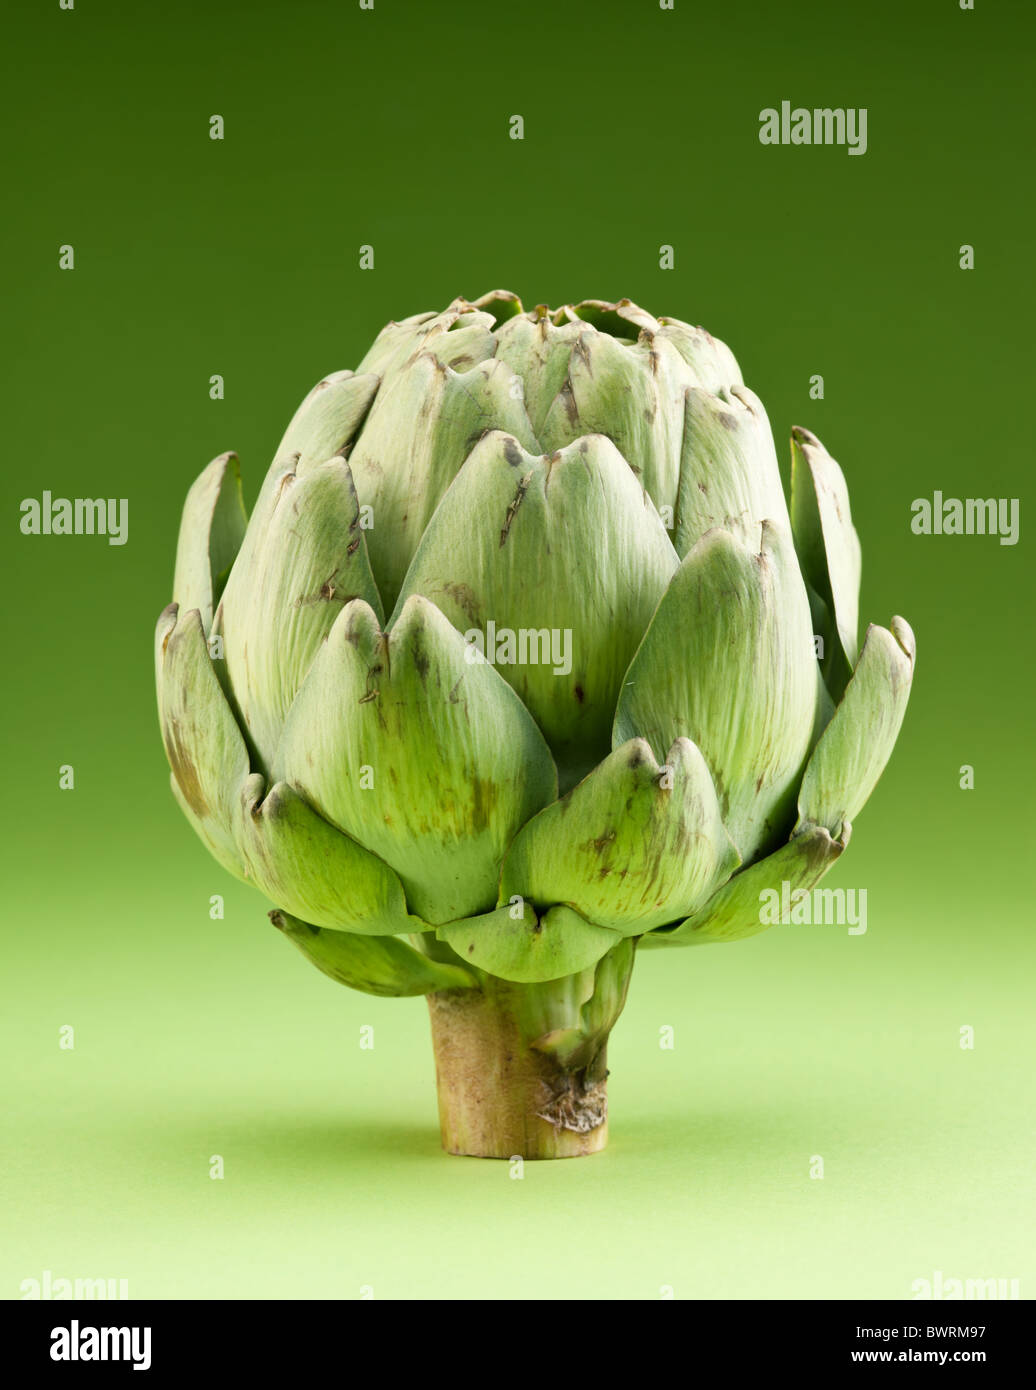 Artichoke on a green background Stock Photo